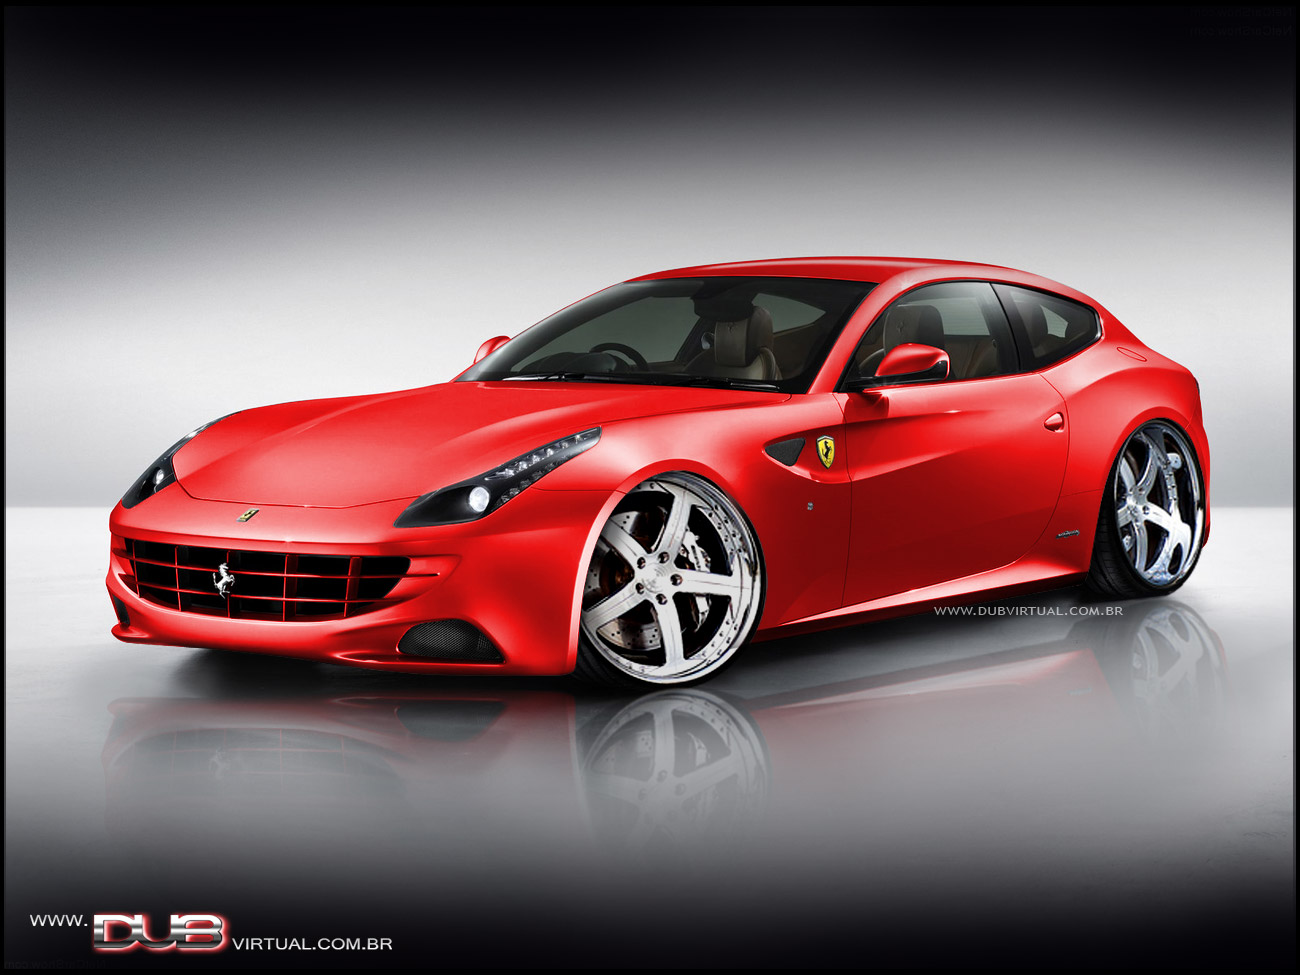 http://2.bp.blogspot.com/-2GKZ7shAQ4M/TbXpYxn2VlI/AAAAAAAAEyY/jfQMES6YaAo/s1600/Nova-Ferrari-FF-2012-rebaixada-roda-22.jpg